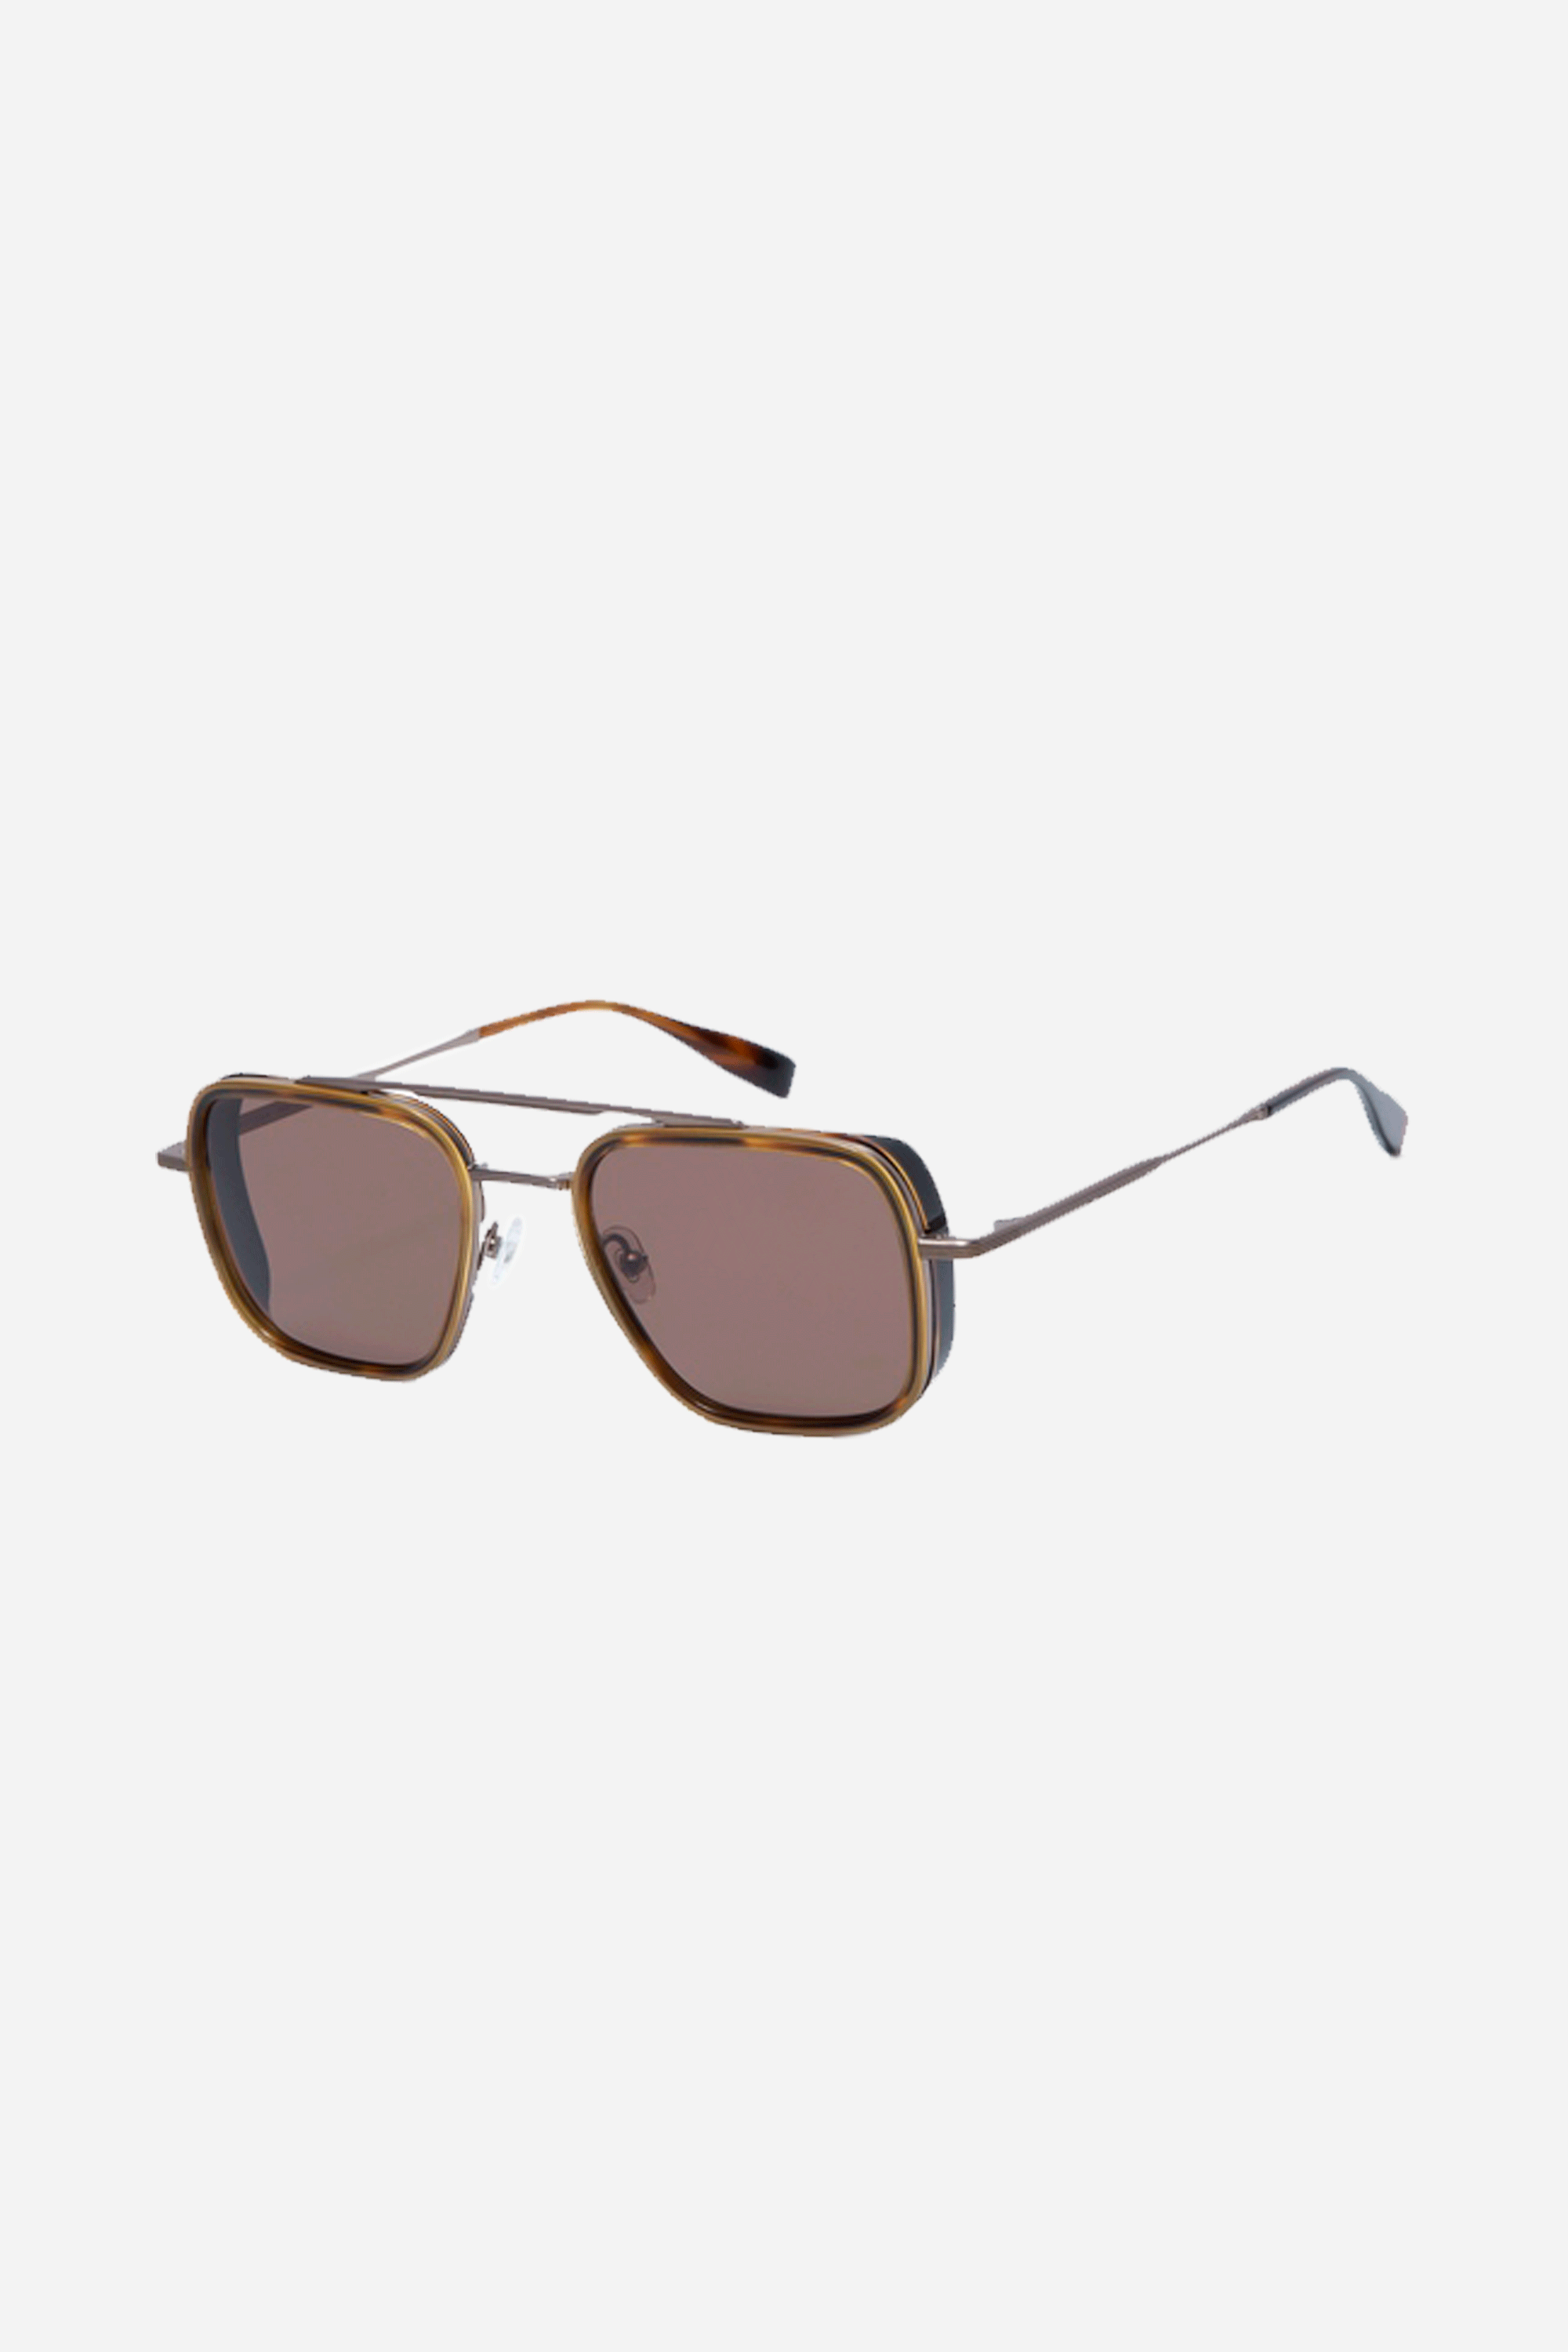 Gigi Studios squared combined havana sunglasses - Eyewear Club